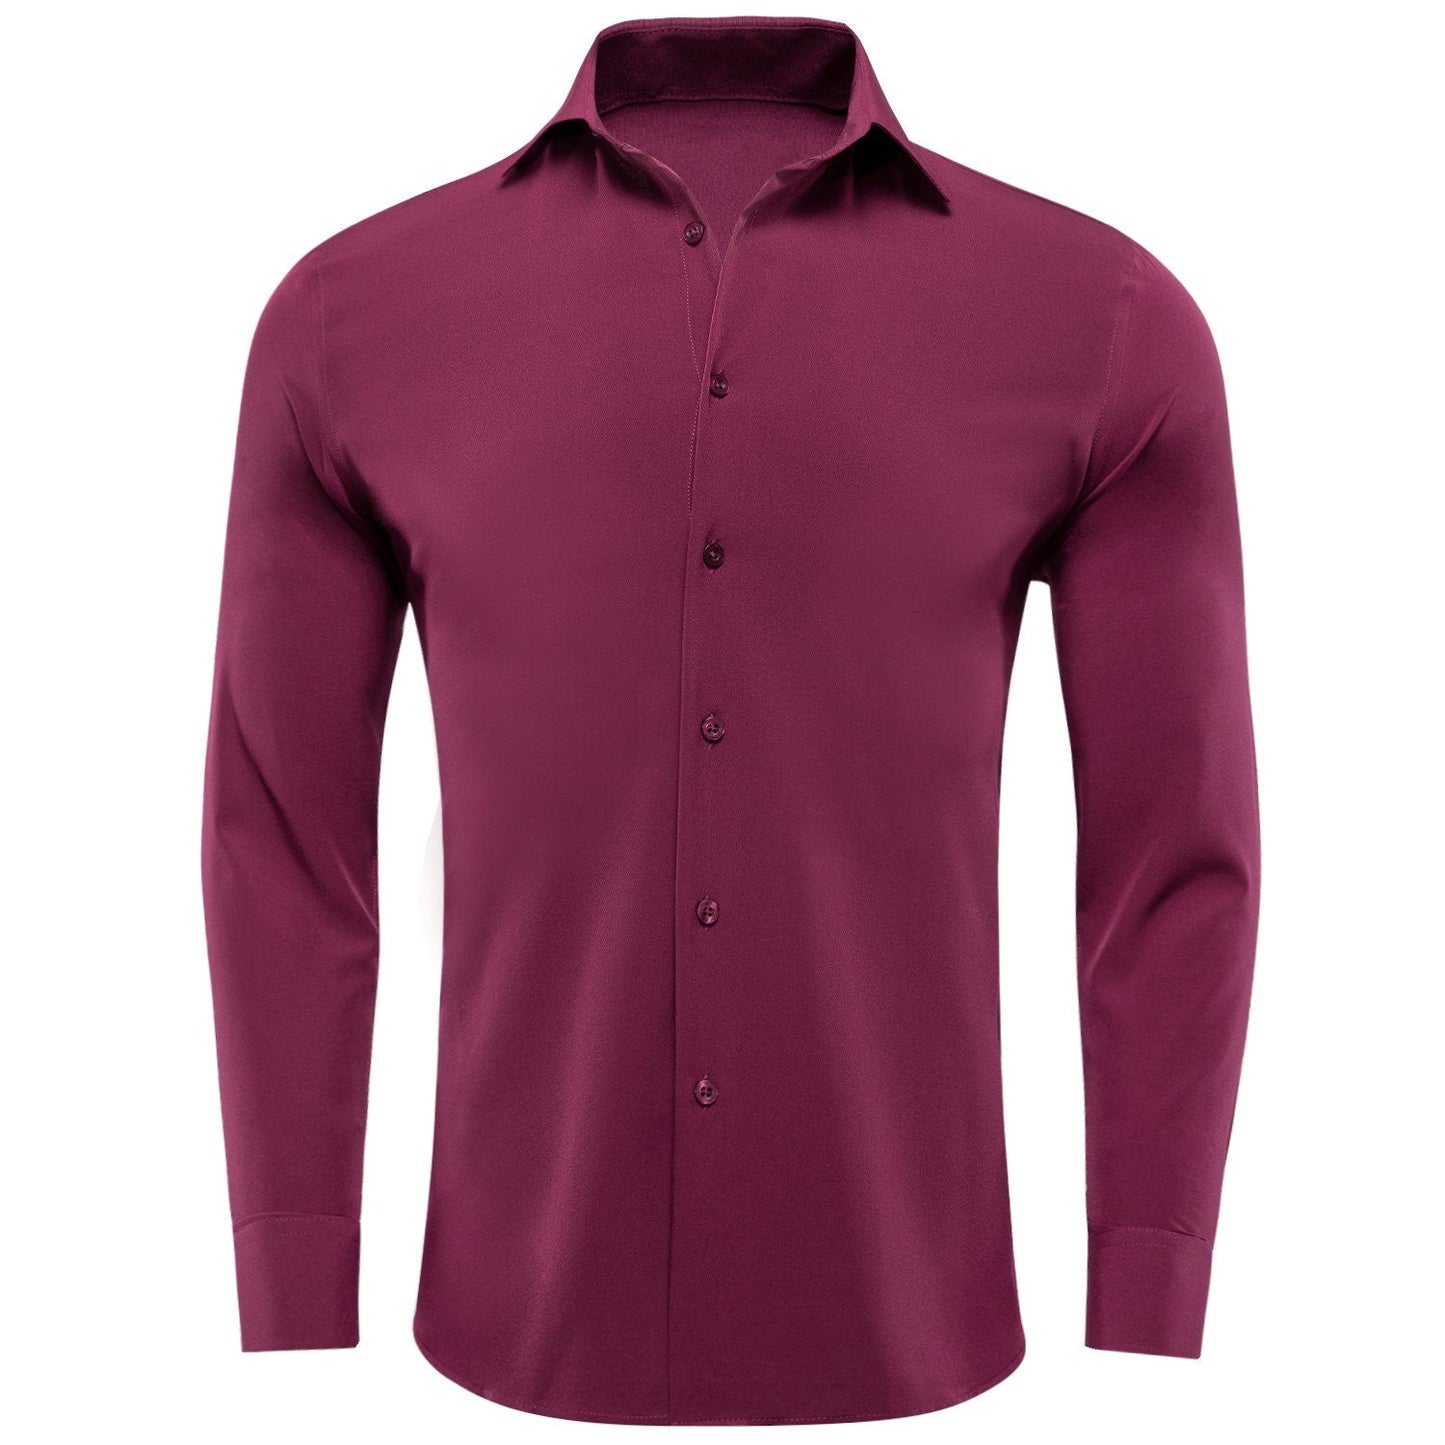 Men's 4-Way Stretch Dress Shirt Wrinkle-Free Long Sleeve Purple